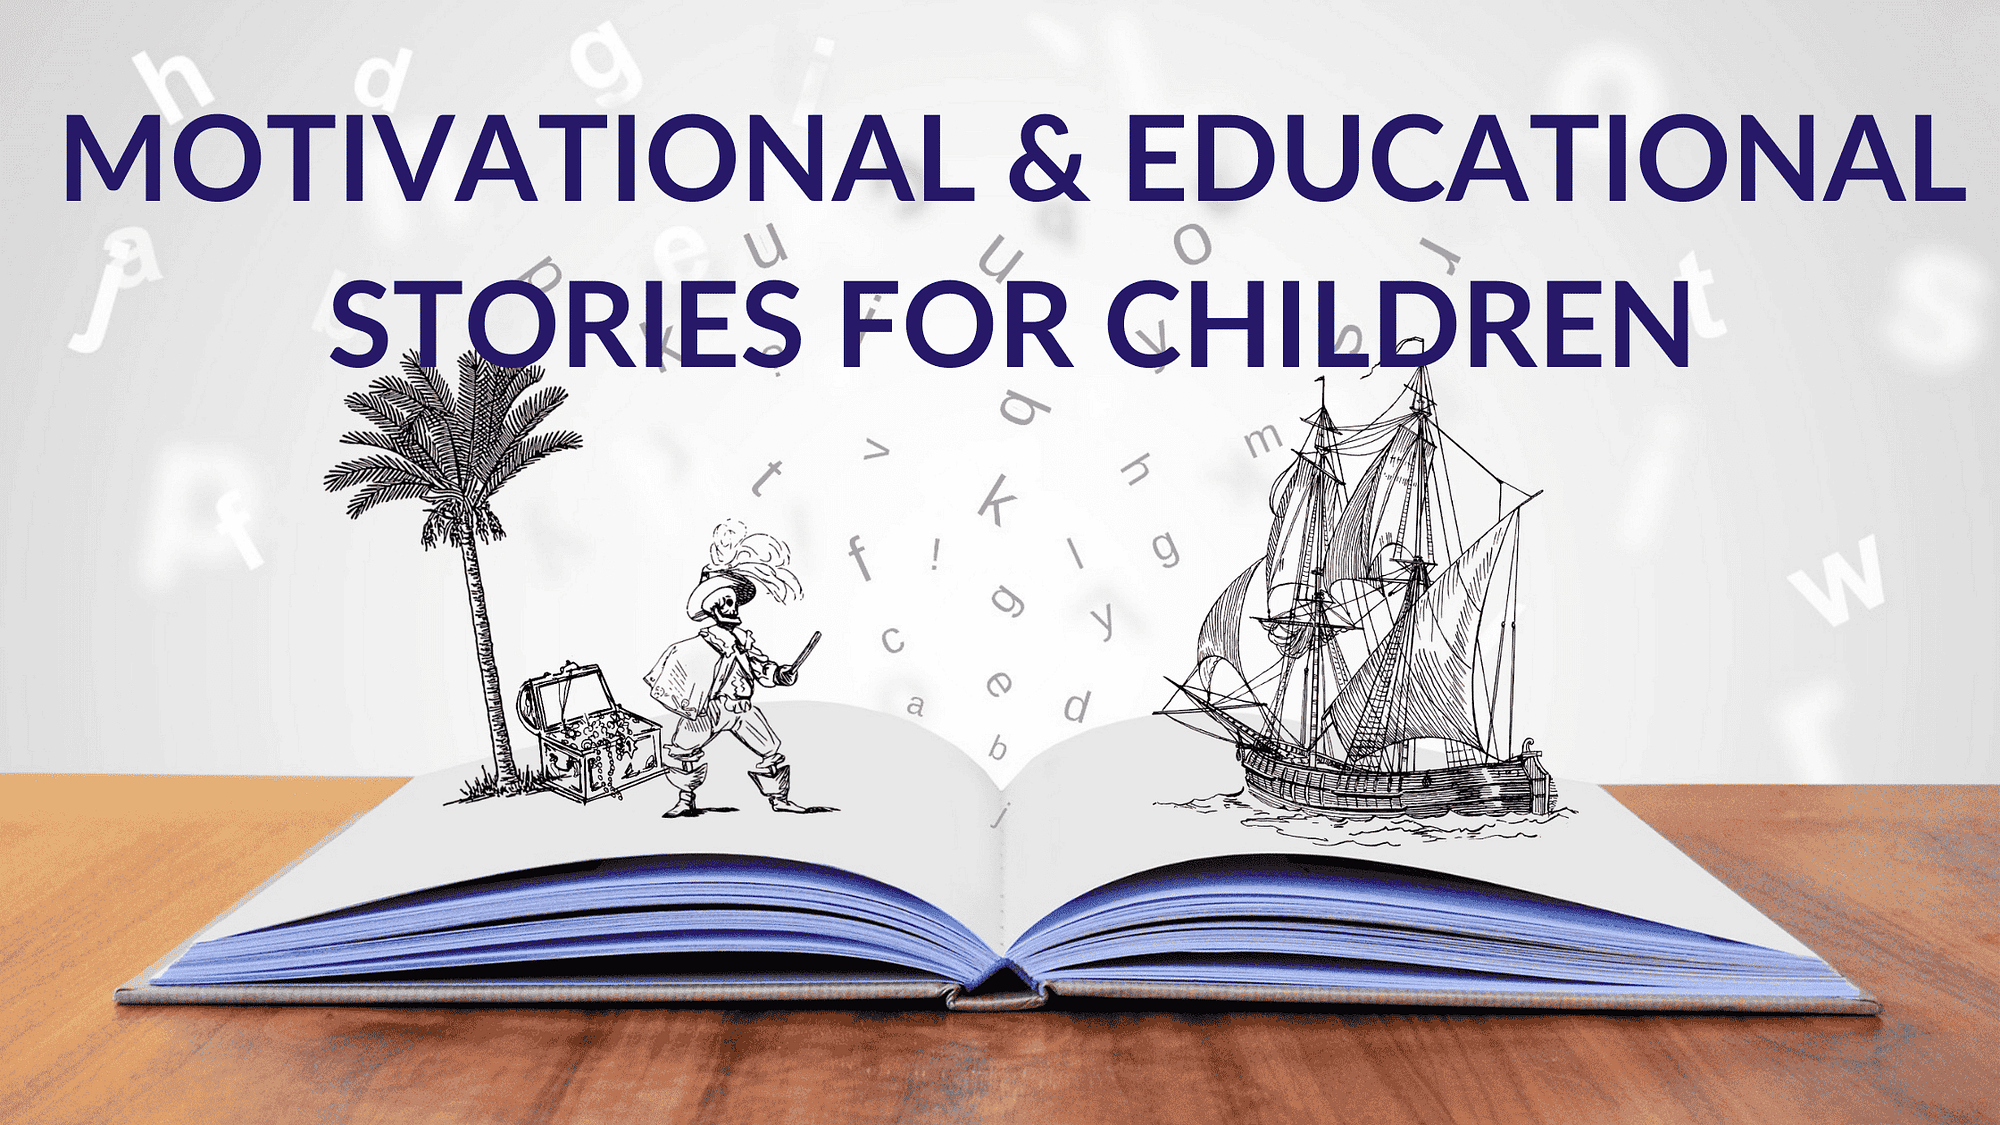 Educational Stories for Children, inspirational stories for children